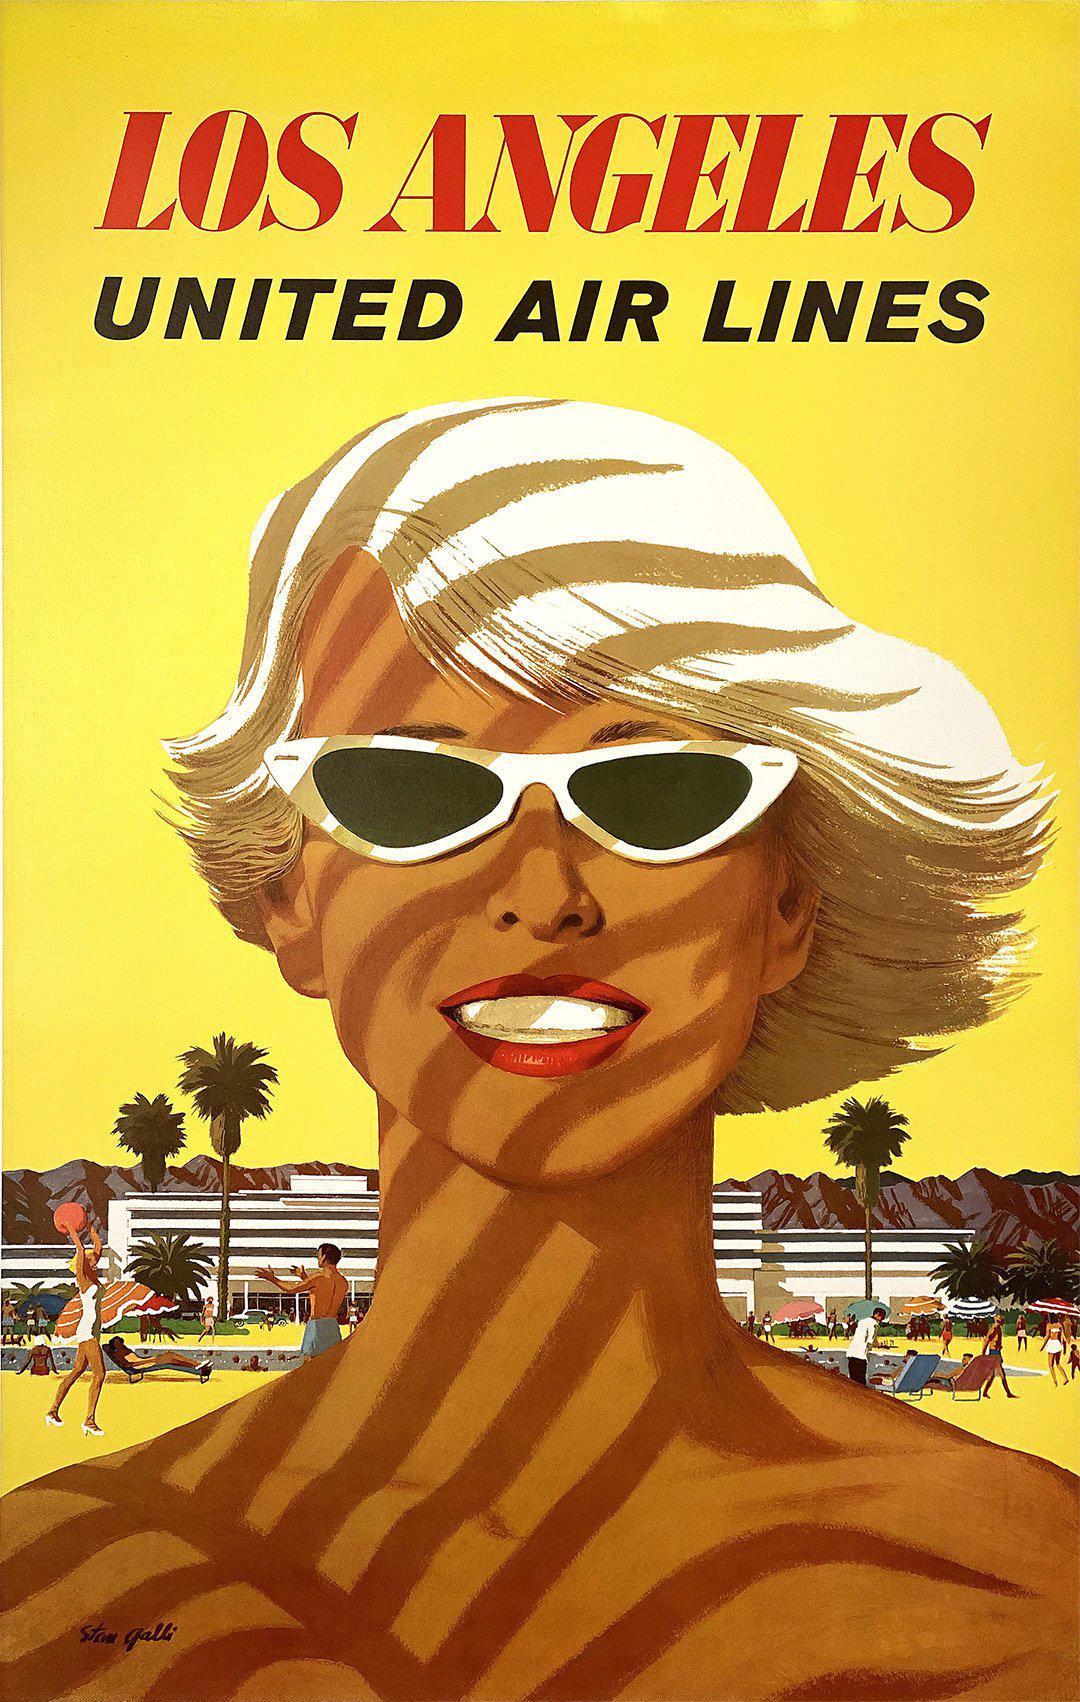 Los Angeles United Air Lines Original Vintage Travel Poster c1955 by Stan Galli